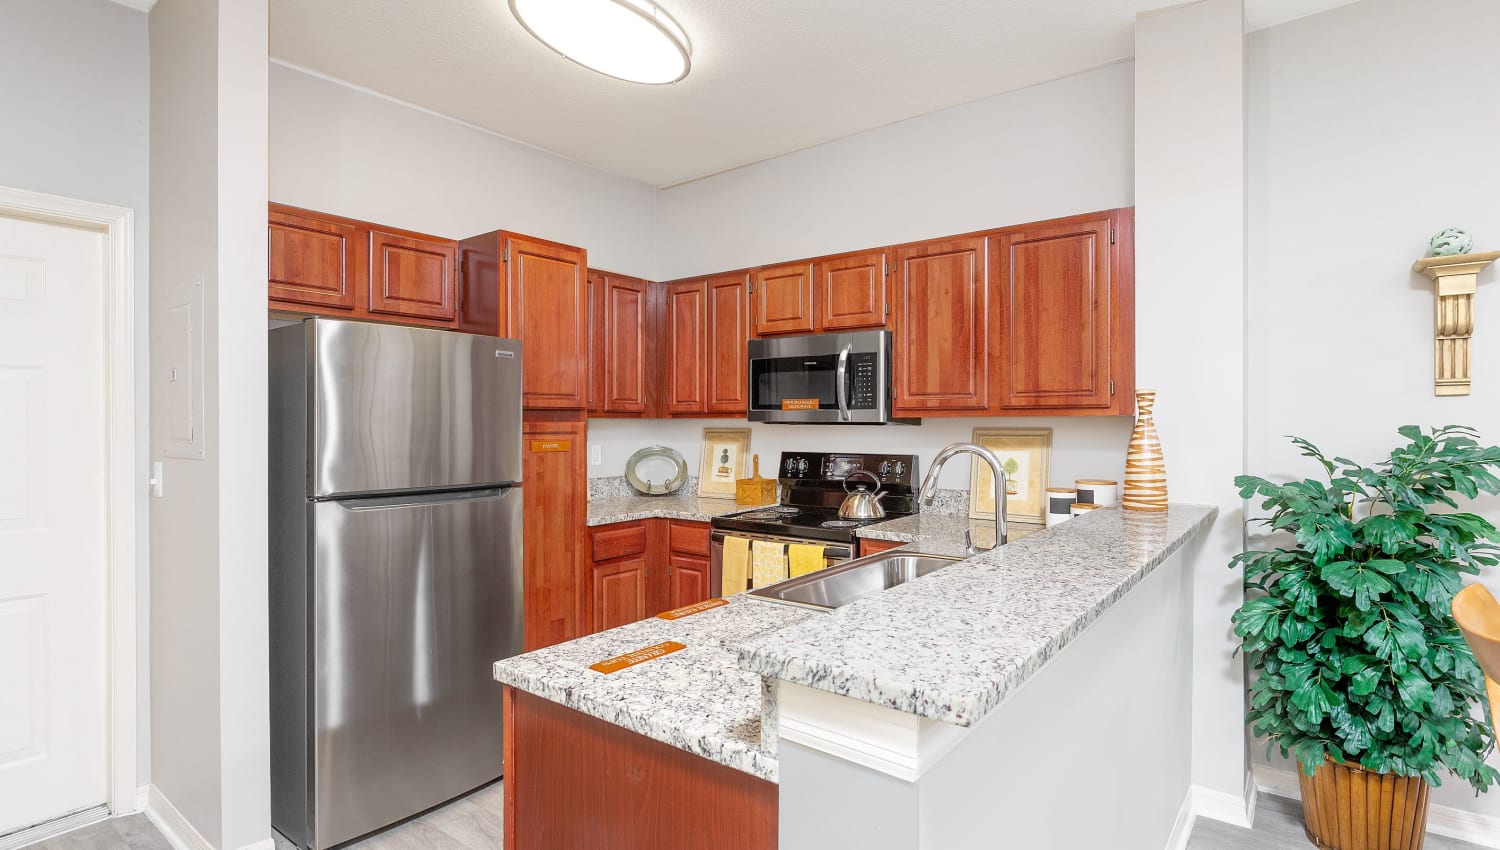 Model kitchen in apartment at Villas of Juno Apartments in Juno Beach, Florida